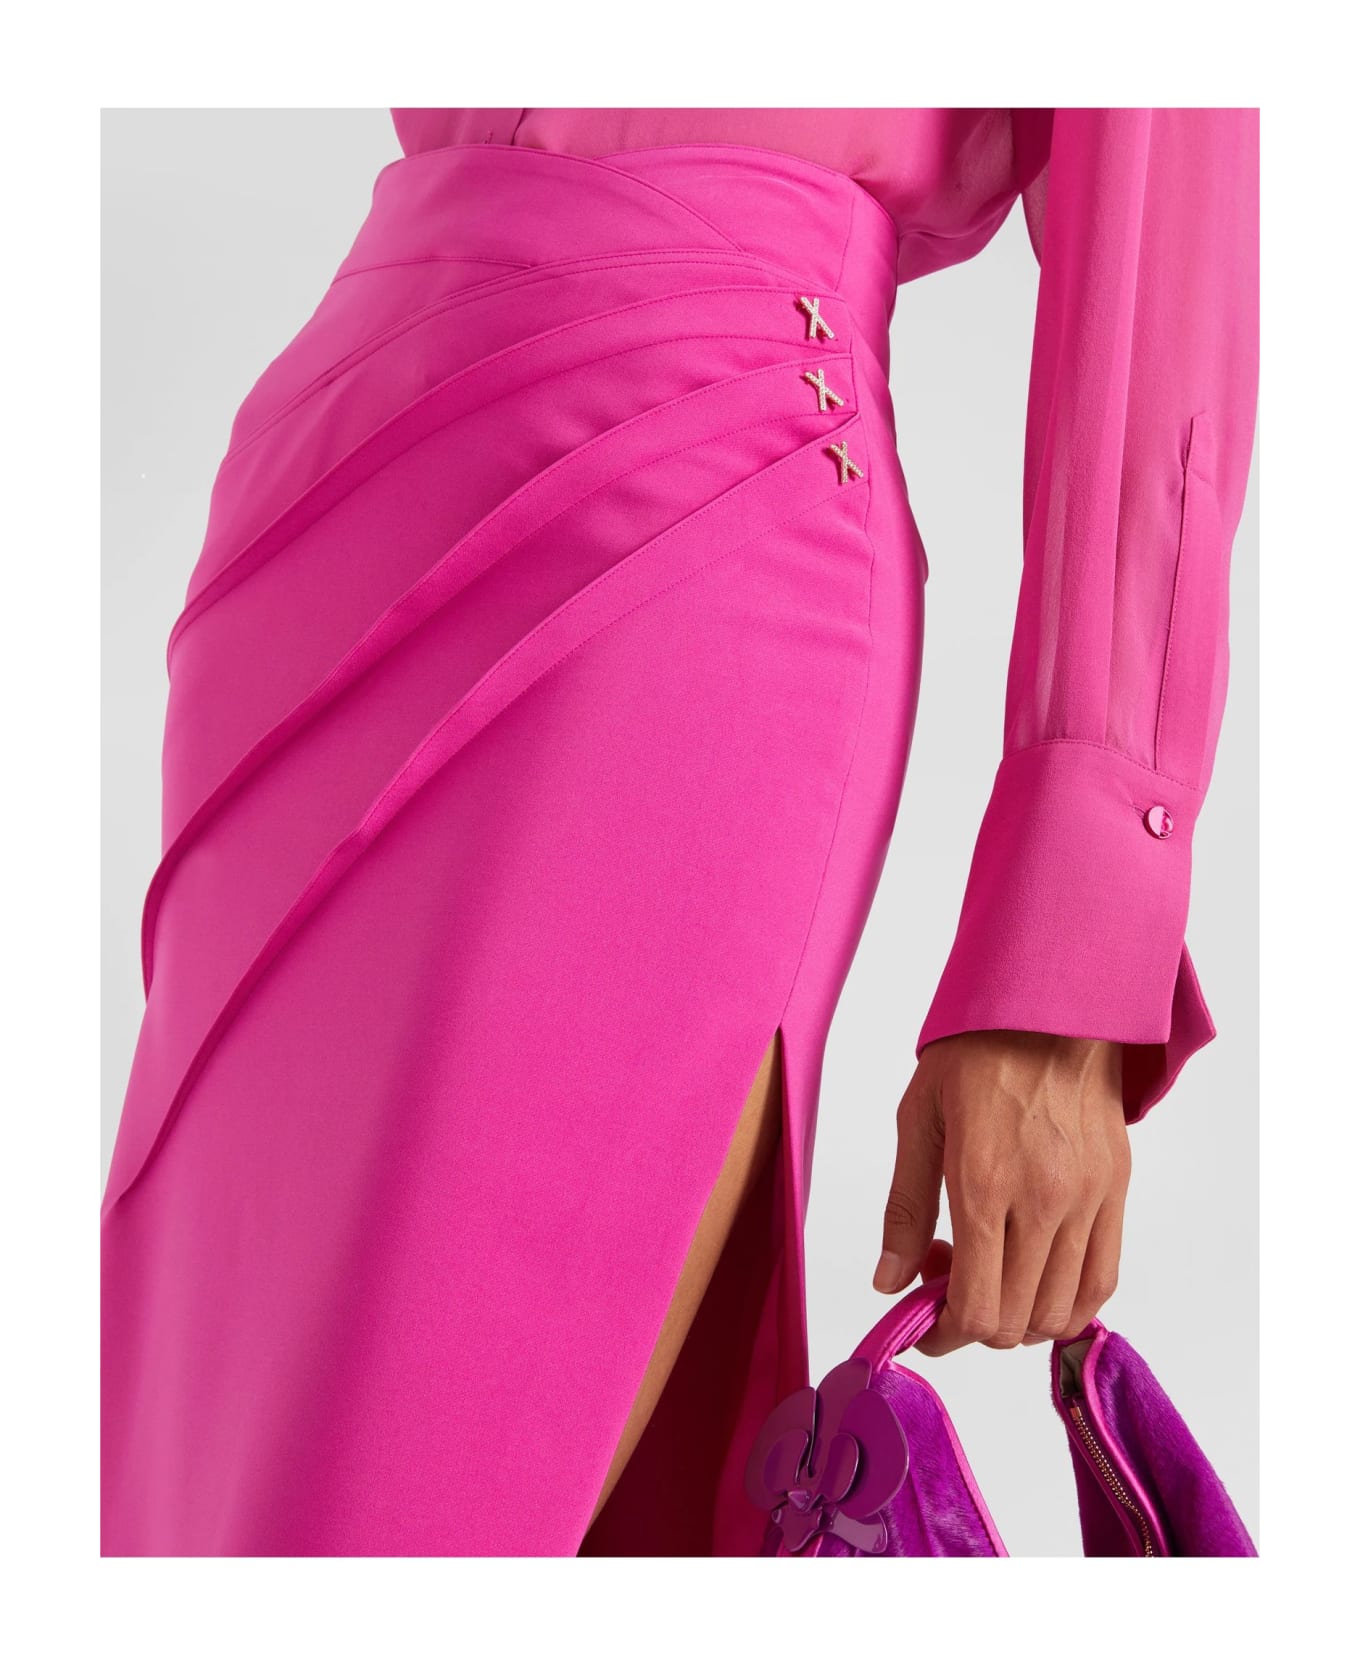 Genny Skirts Pink